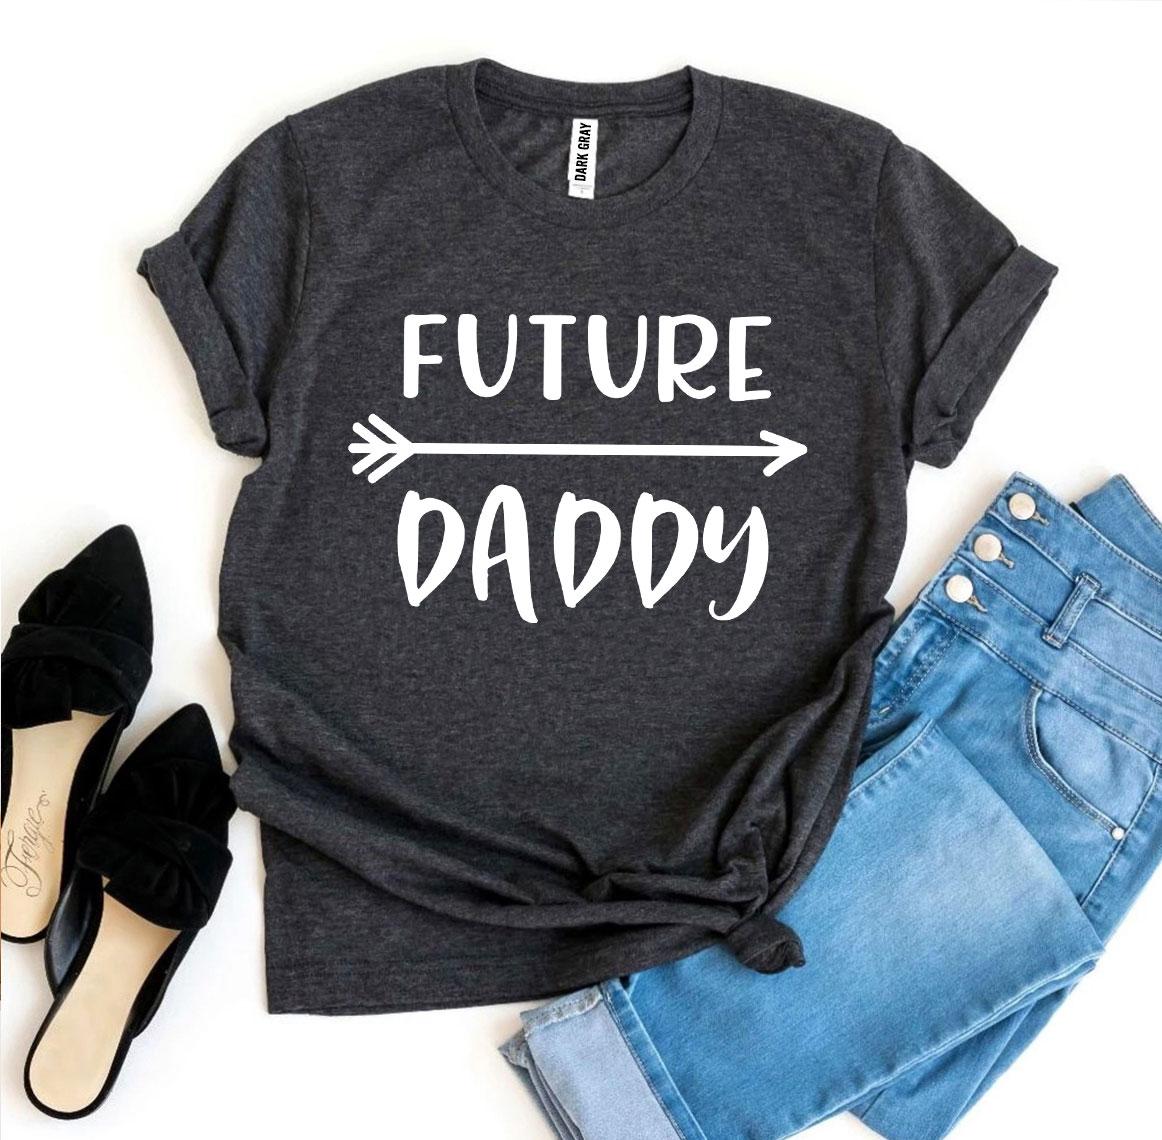 Future Daddy T-shirt